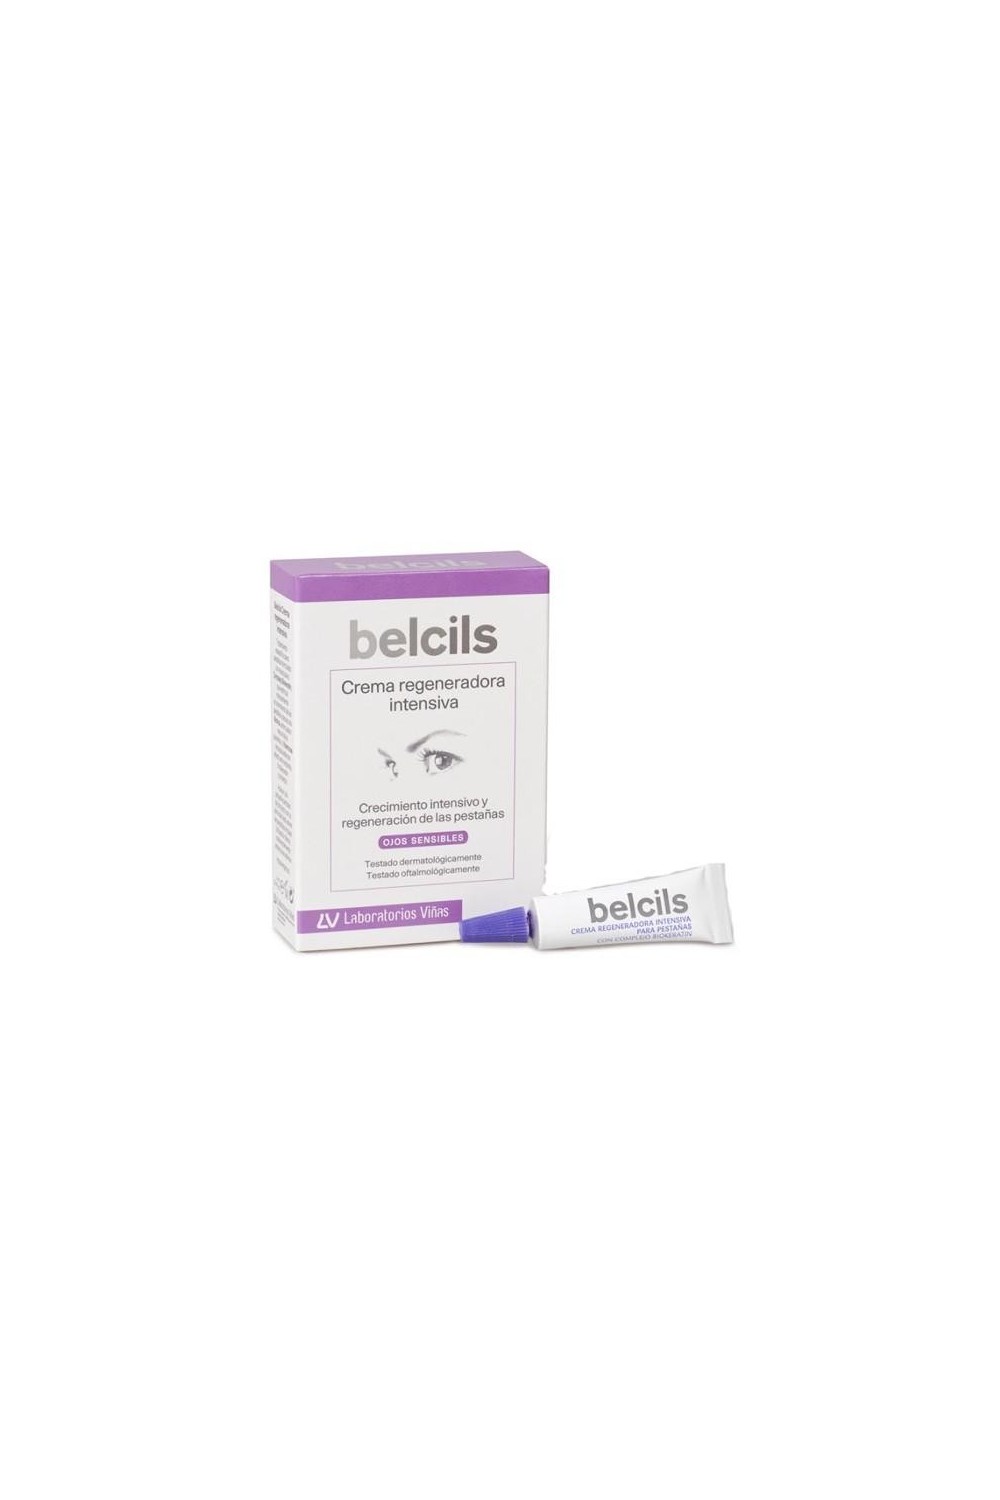 BELCILS - Belcis Intensive Regenerating Cream For Eyelashes 4ml